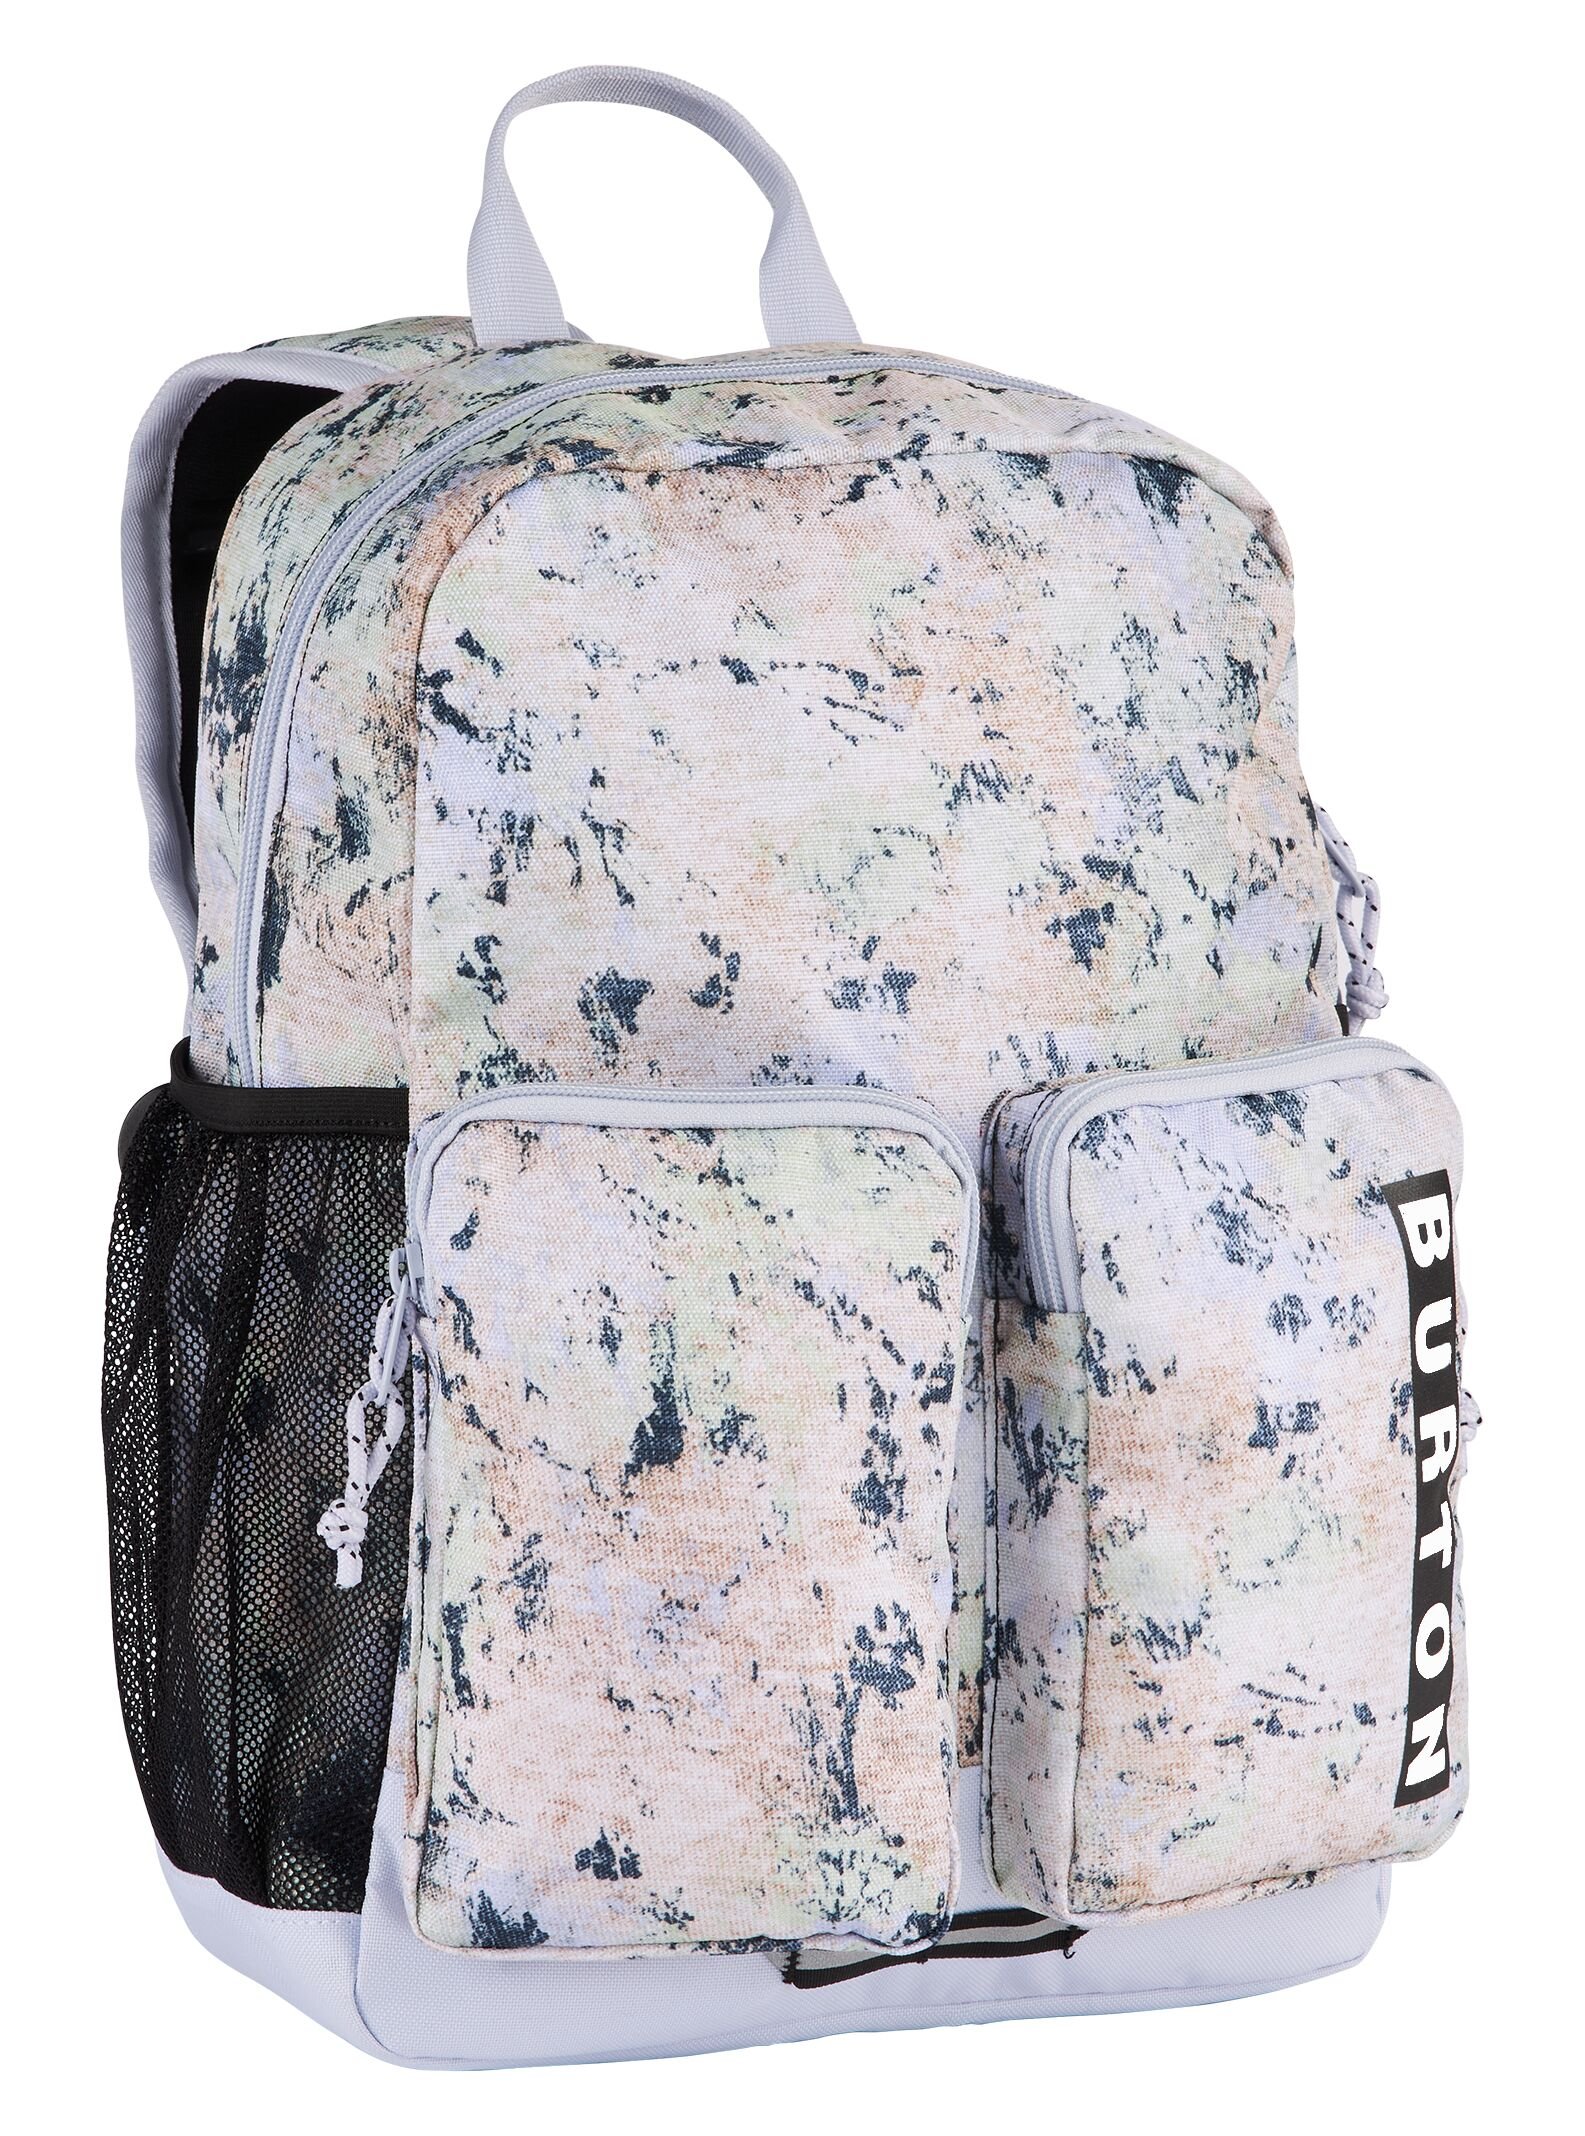 Gromlet_15L Backpack_Opal_Bleached_Floral